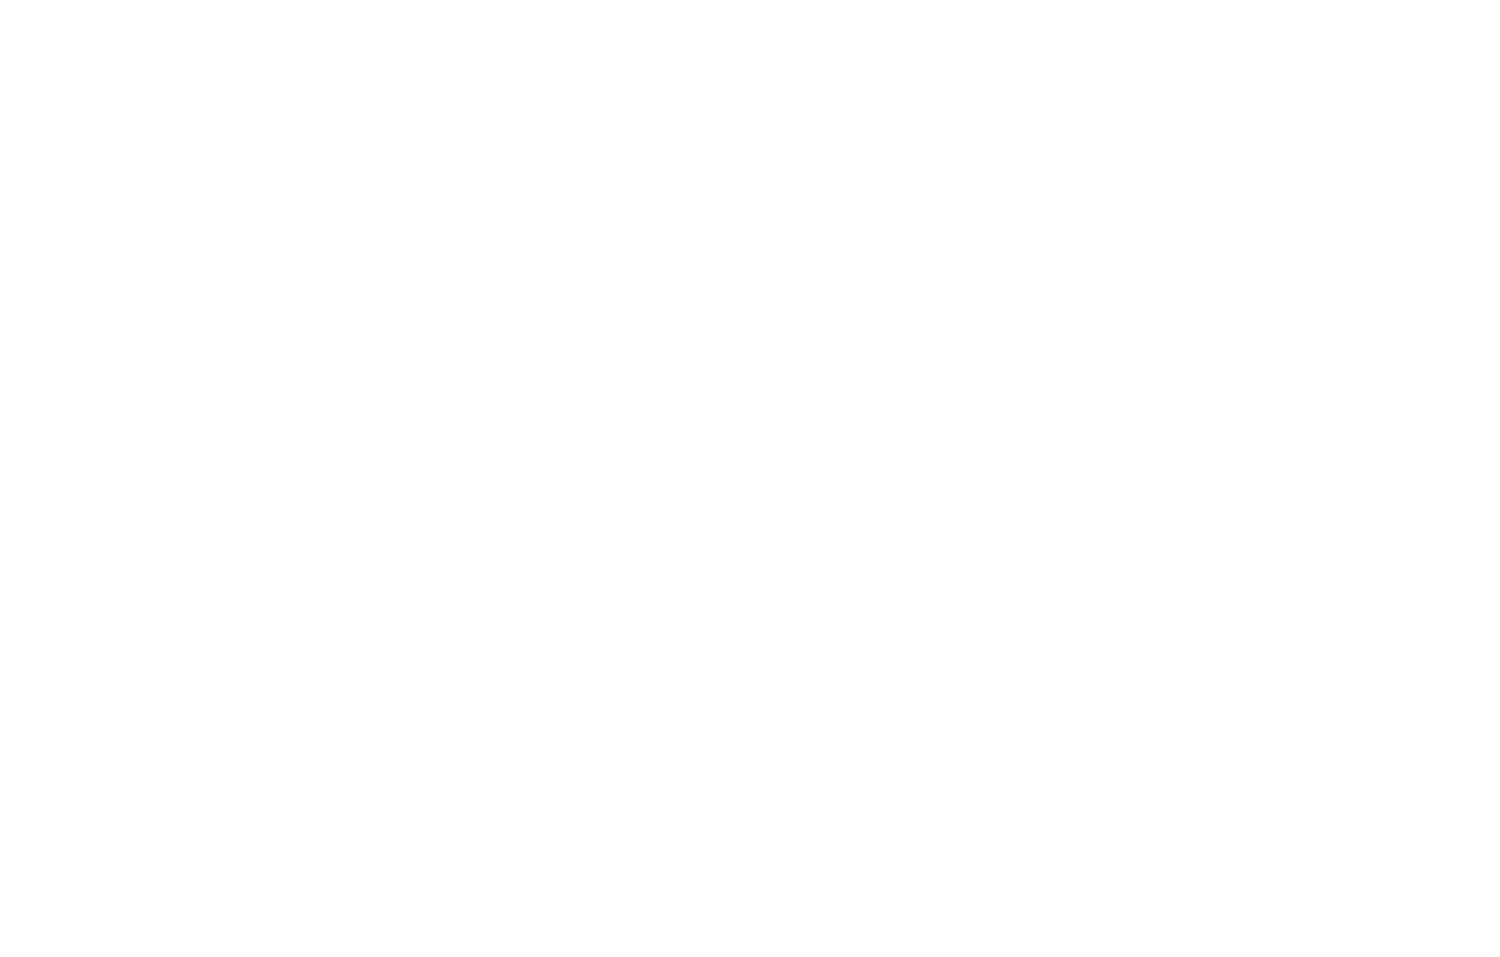 Happy Healing Homecare